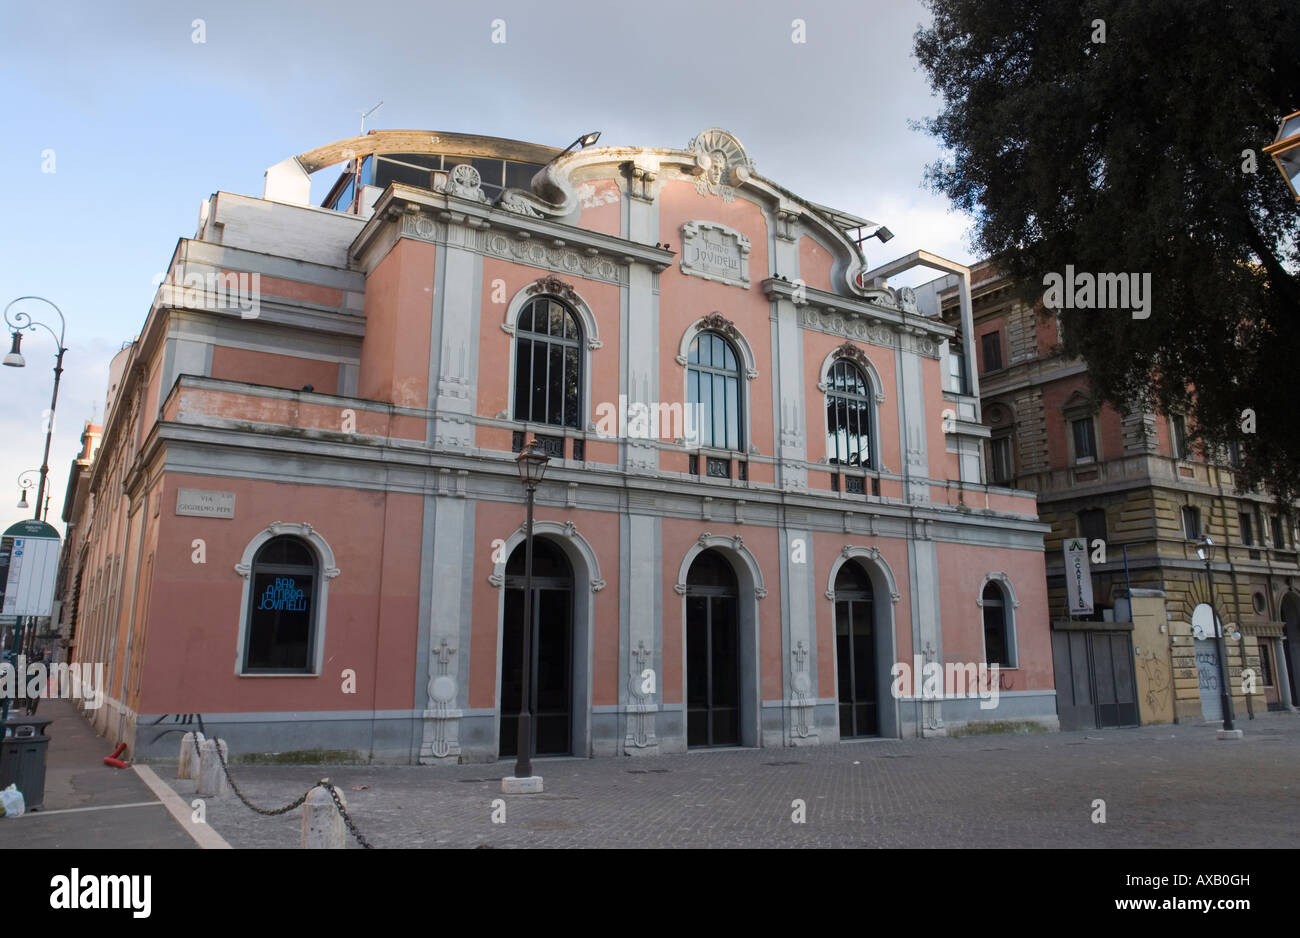 Teatro Ambra Jovinelli in Rome [...] Stock Photo - Alamy